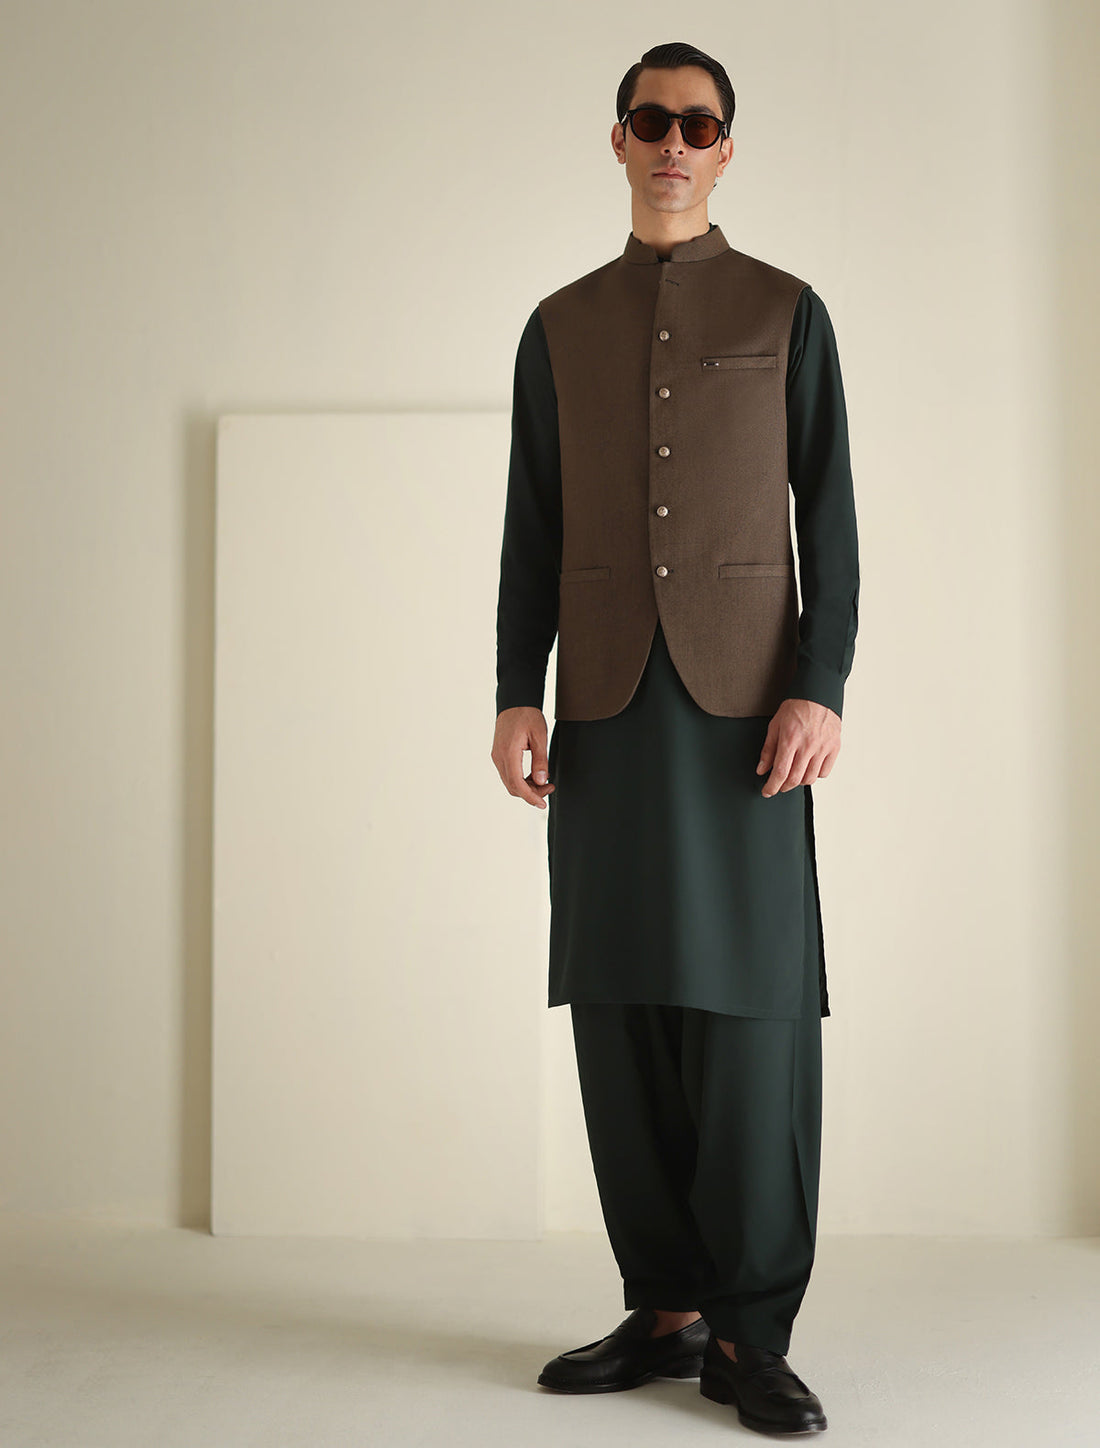 Pakistani Menswear | Ismail Farid - BROWN WAISTCOAT - Khanumjan  Pakistani Clothes and Designer Dresses in UK, USA 